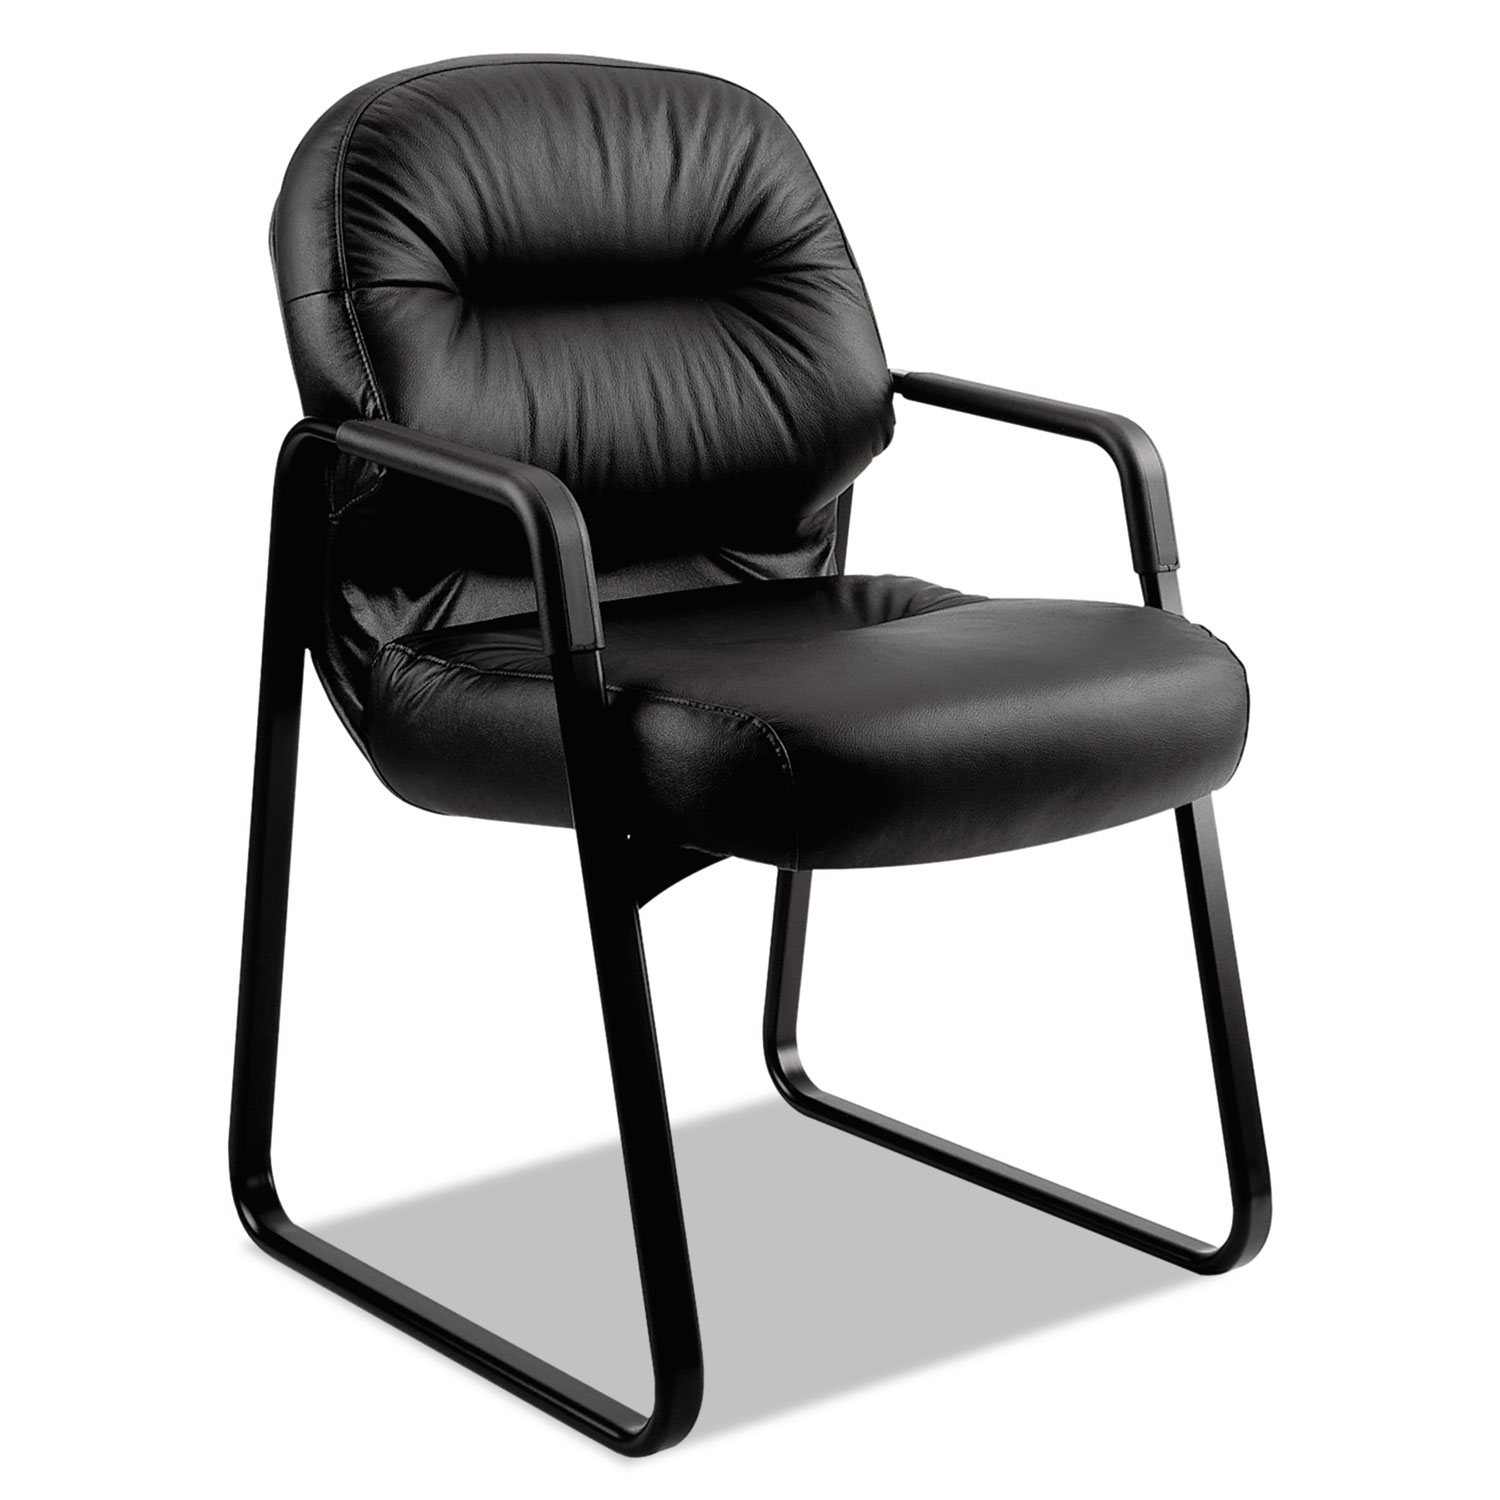  HON H2093.SR11.T Pillow-Soft 2090 Series Guest Arm Chair, 31.25 x 35.75 x 36, Black Seat/Black Back, Black Base (HON2093SR11T) 